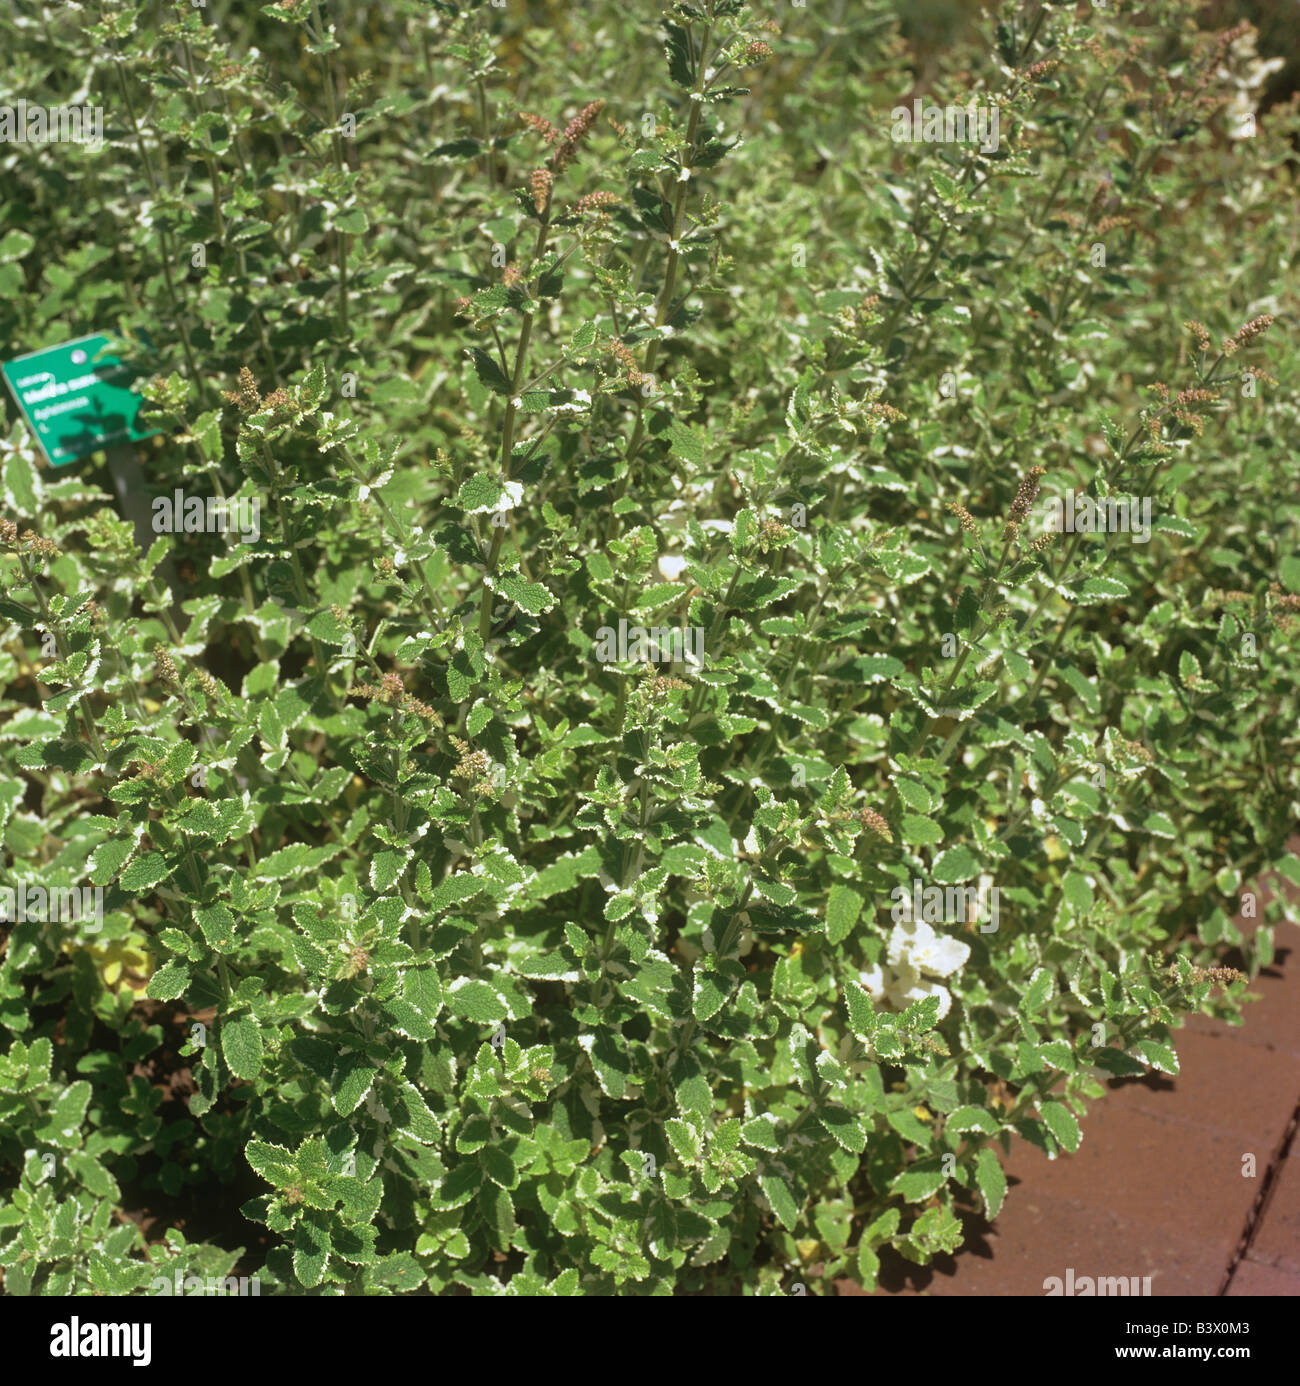 apple mint / Mentha suaveolens Stock Photo